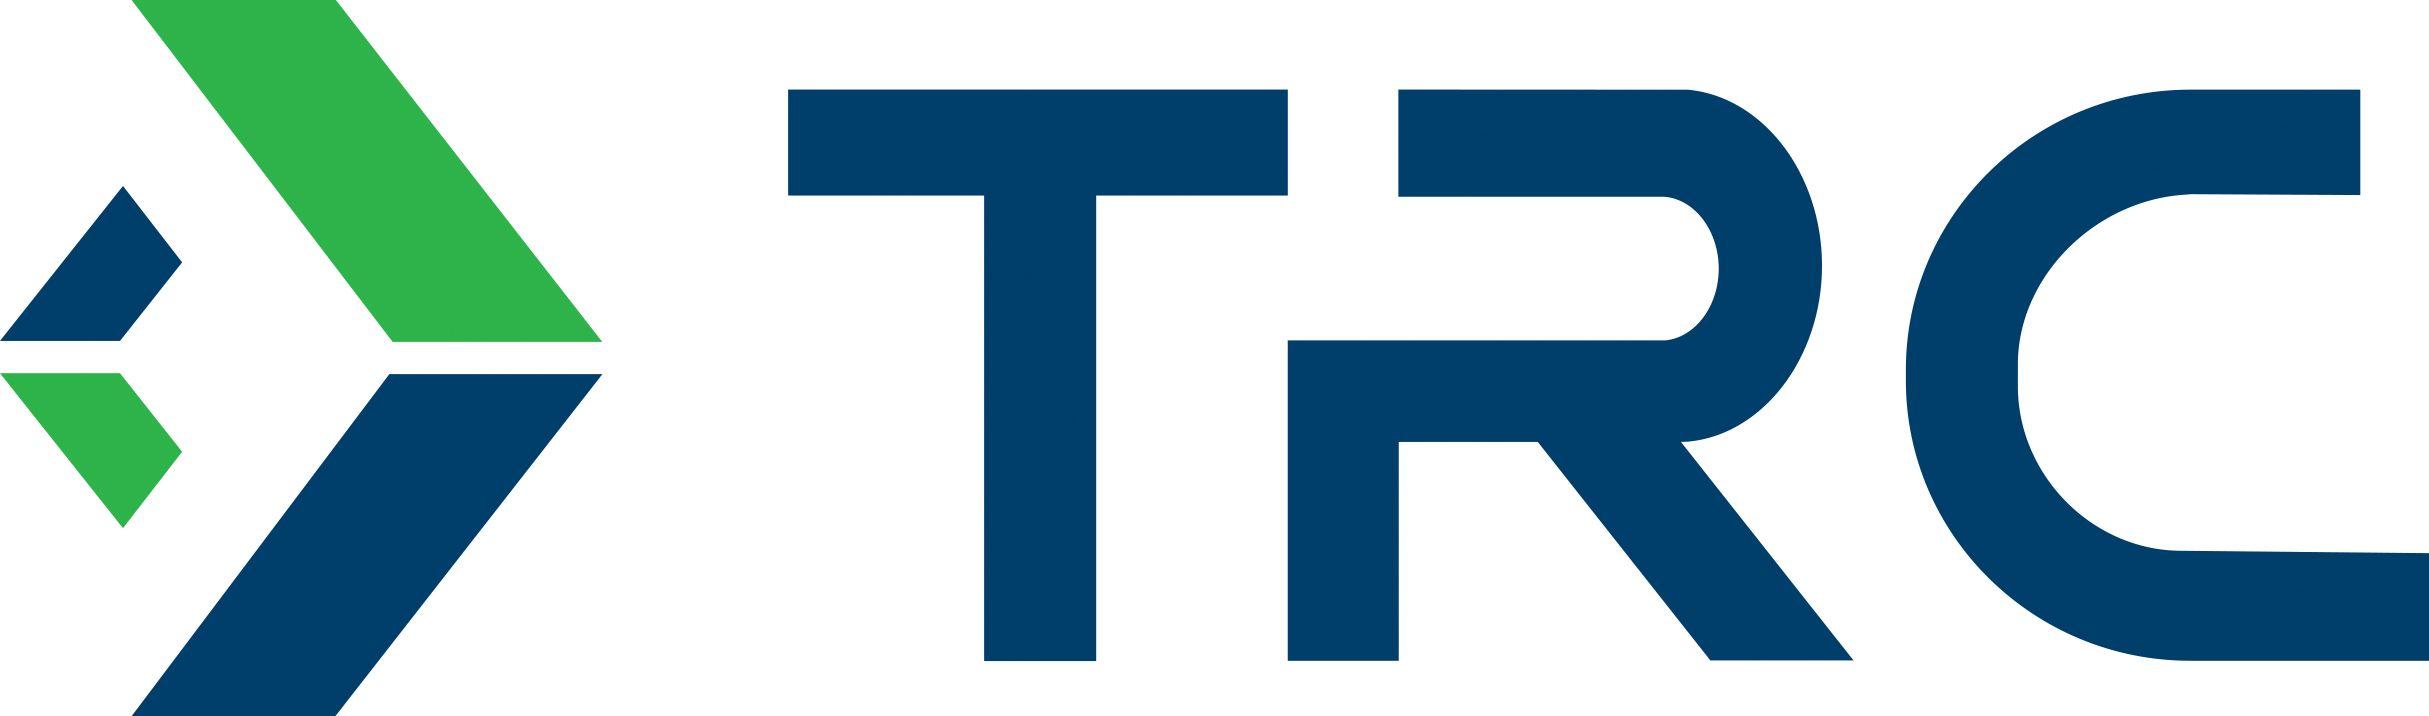 TRC Logo - EDD Format for TRC. EarthSoft, Inc. Environmental Data Management